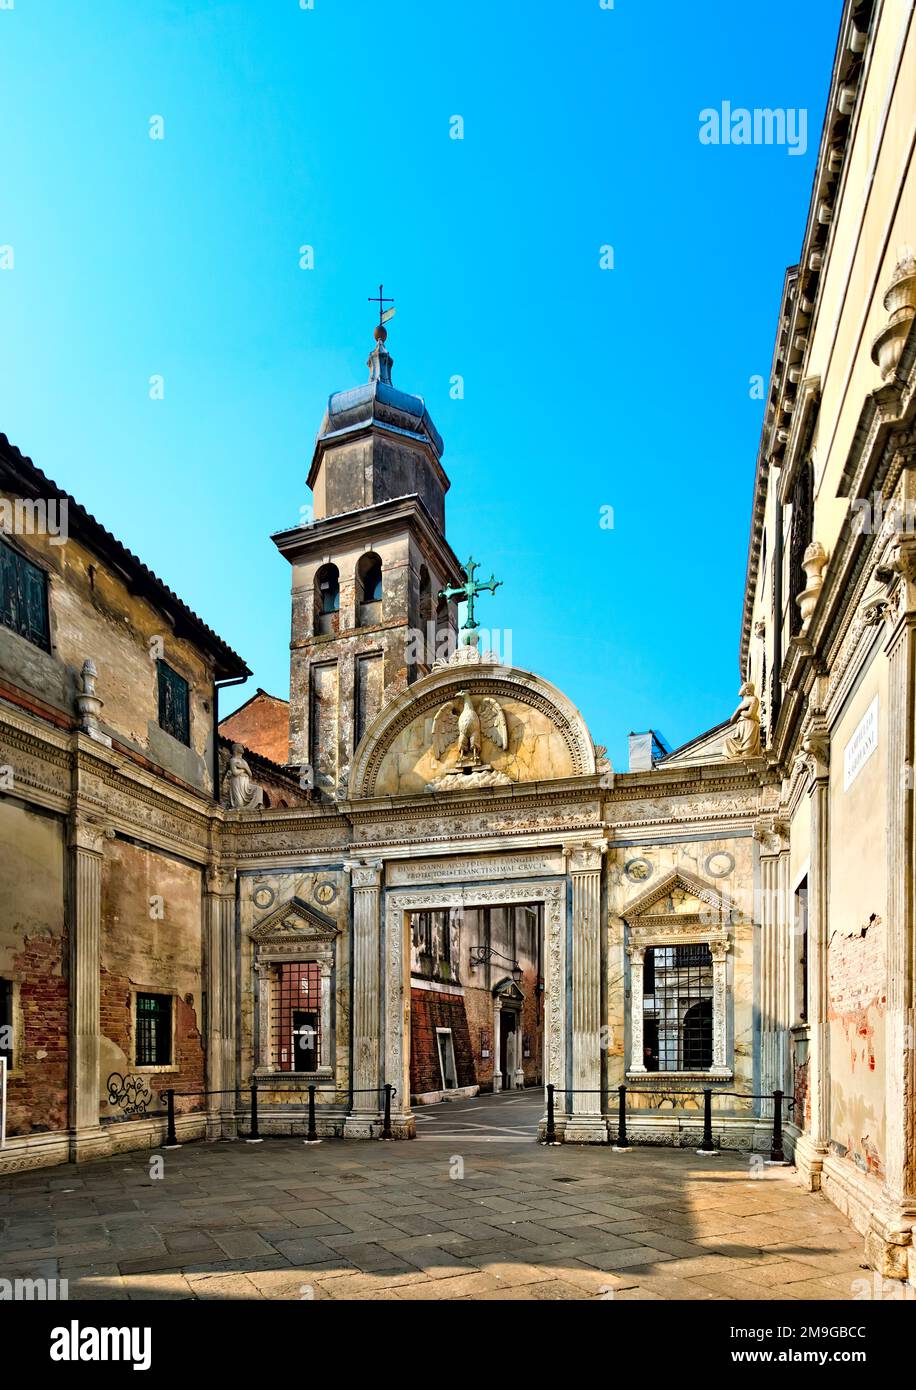 Architecture of historic church, Venice, Italy Stock Photo